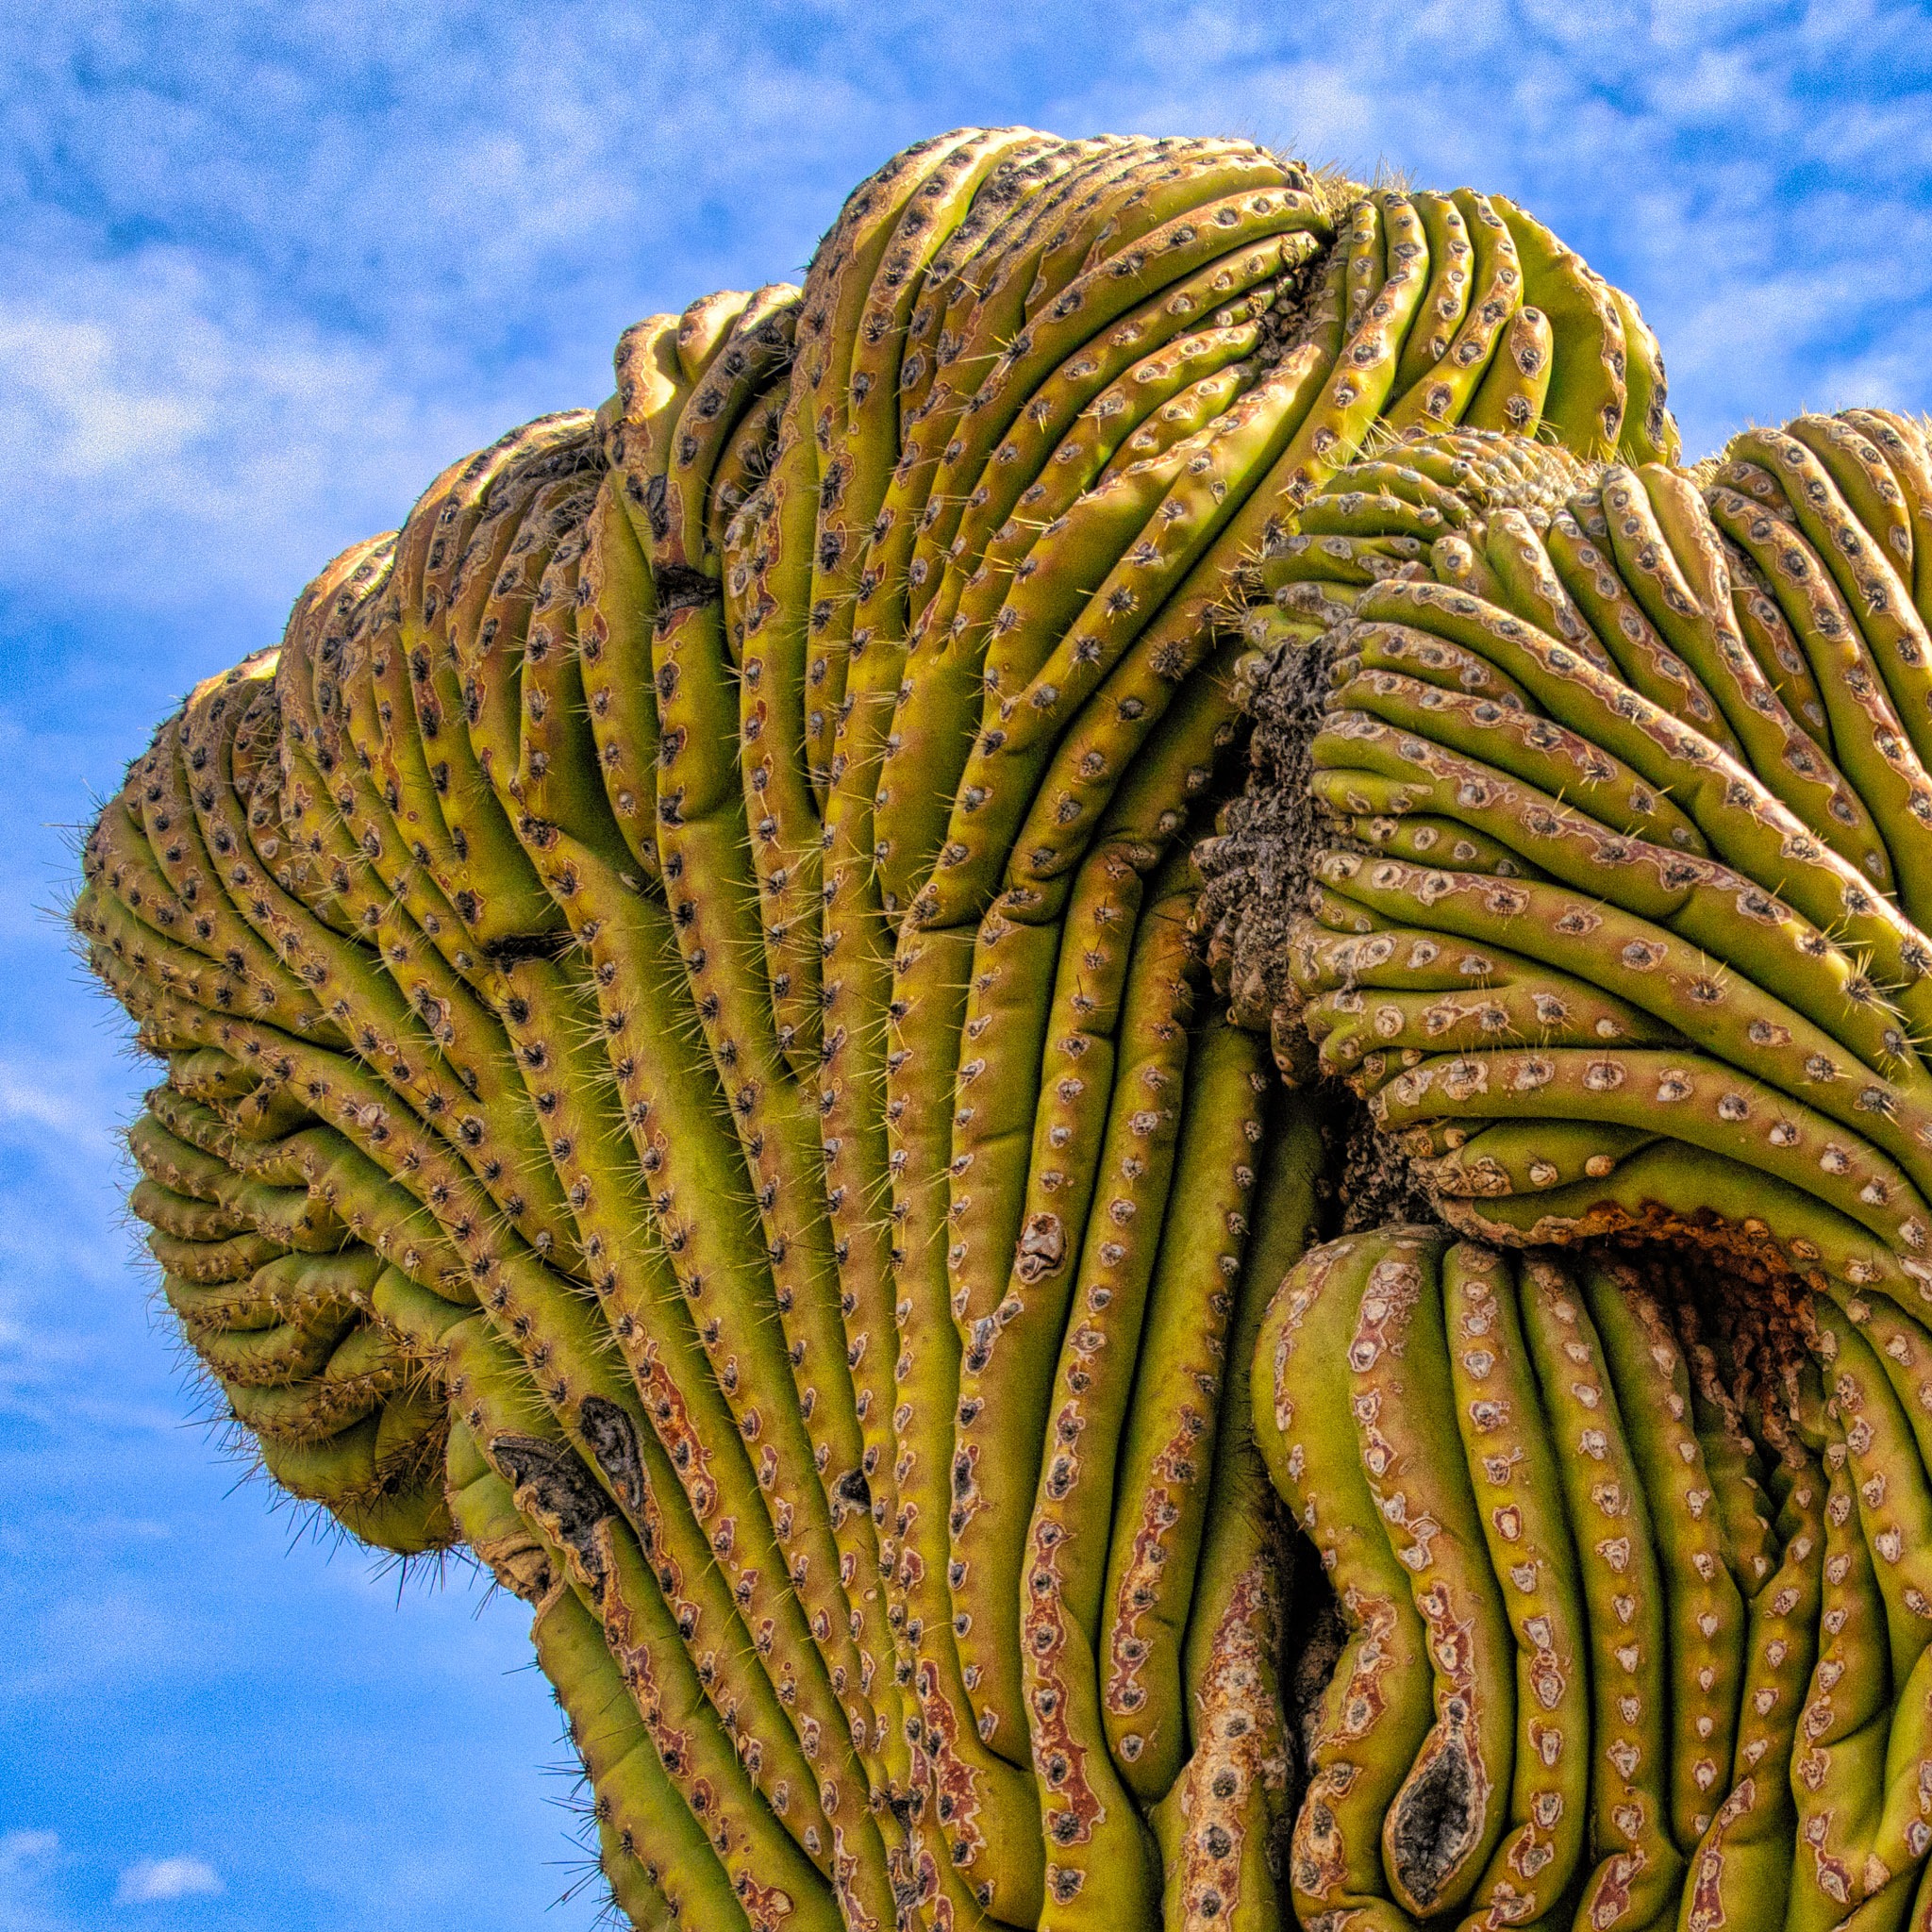 This Saguaro Cactus in the Arizona-Sonoran Desert Museum looks as if it has a turban.